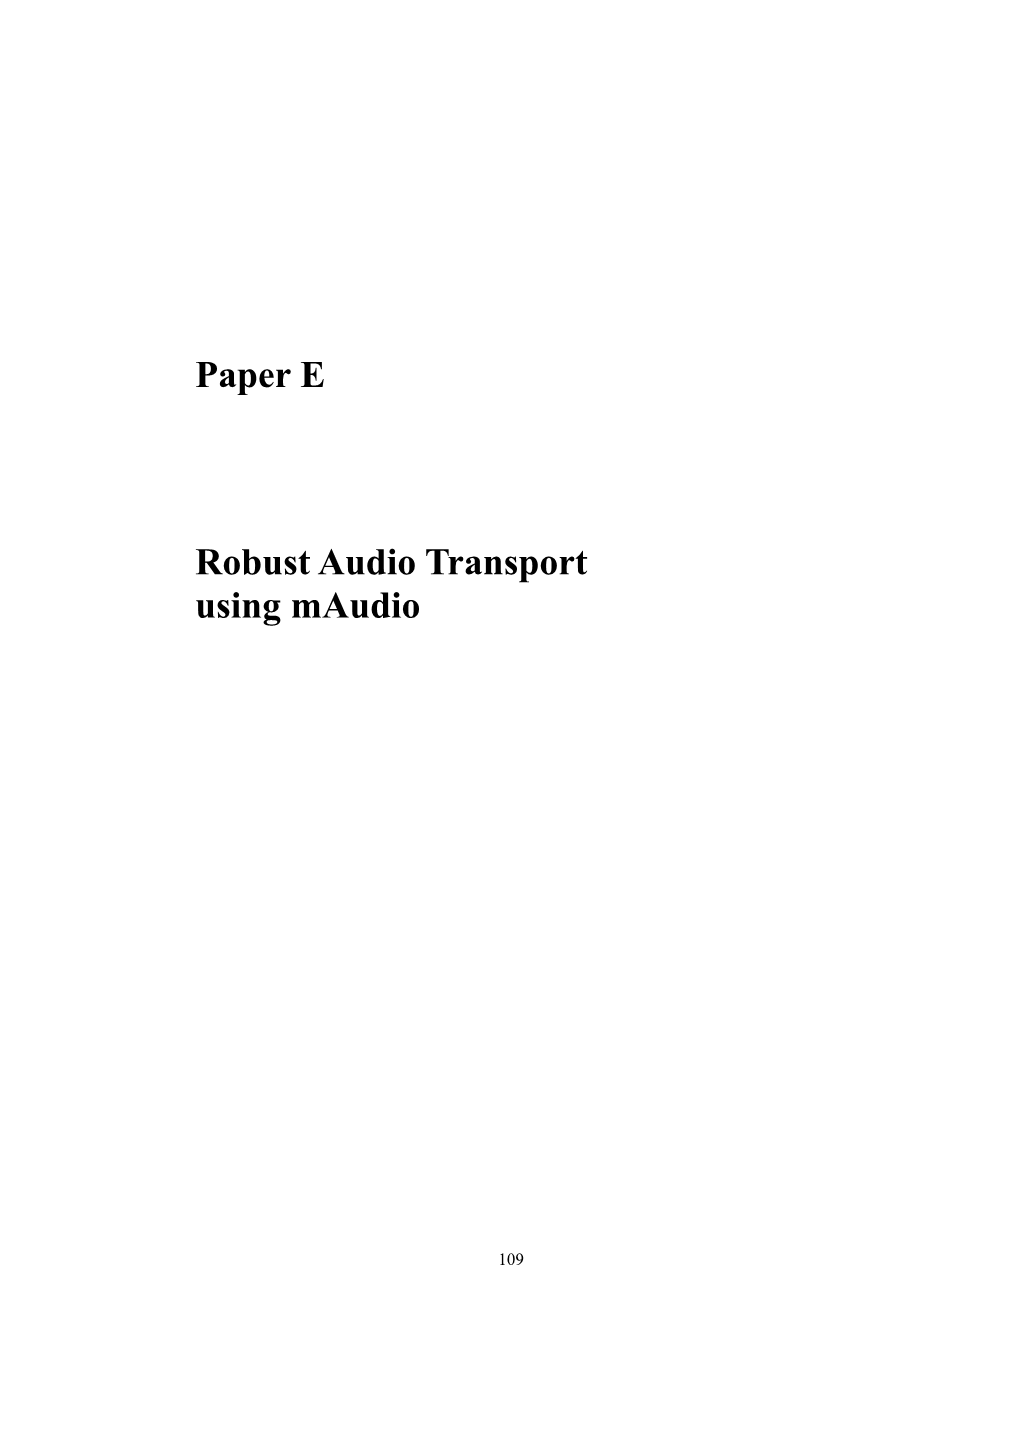 Paper E - Robust Audio Transport Using Maudio